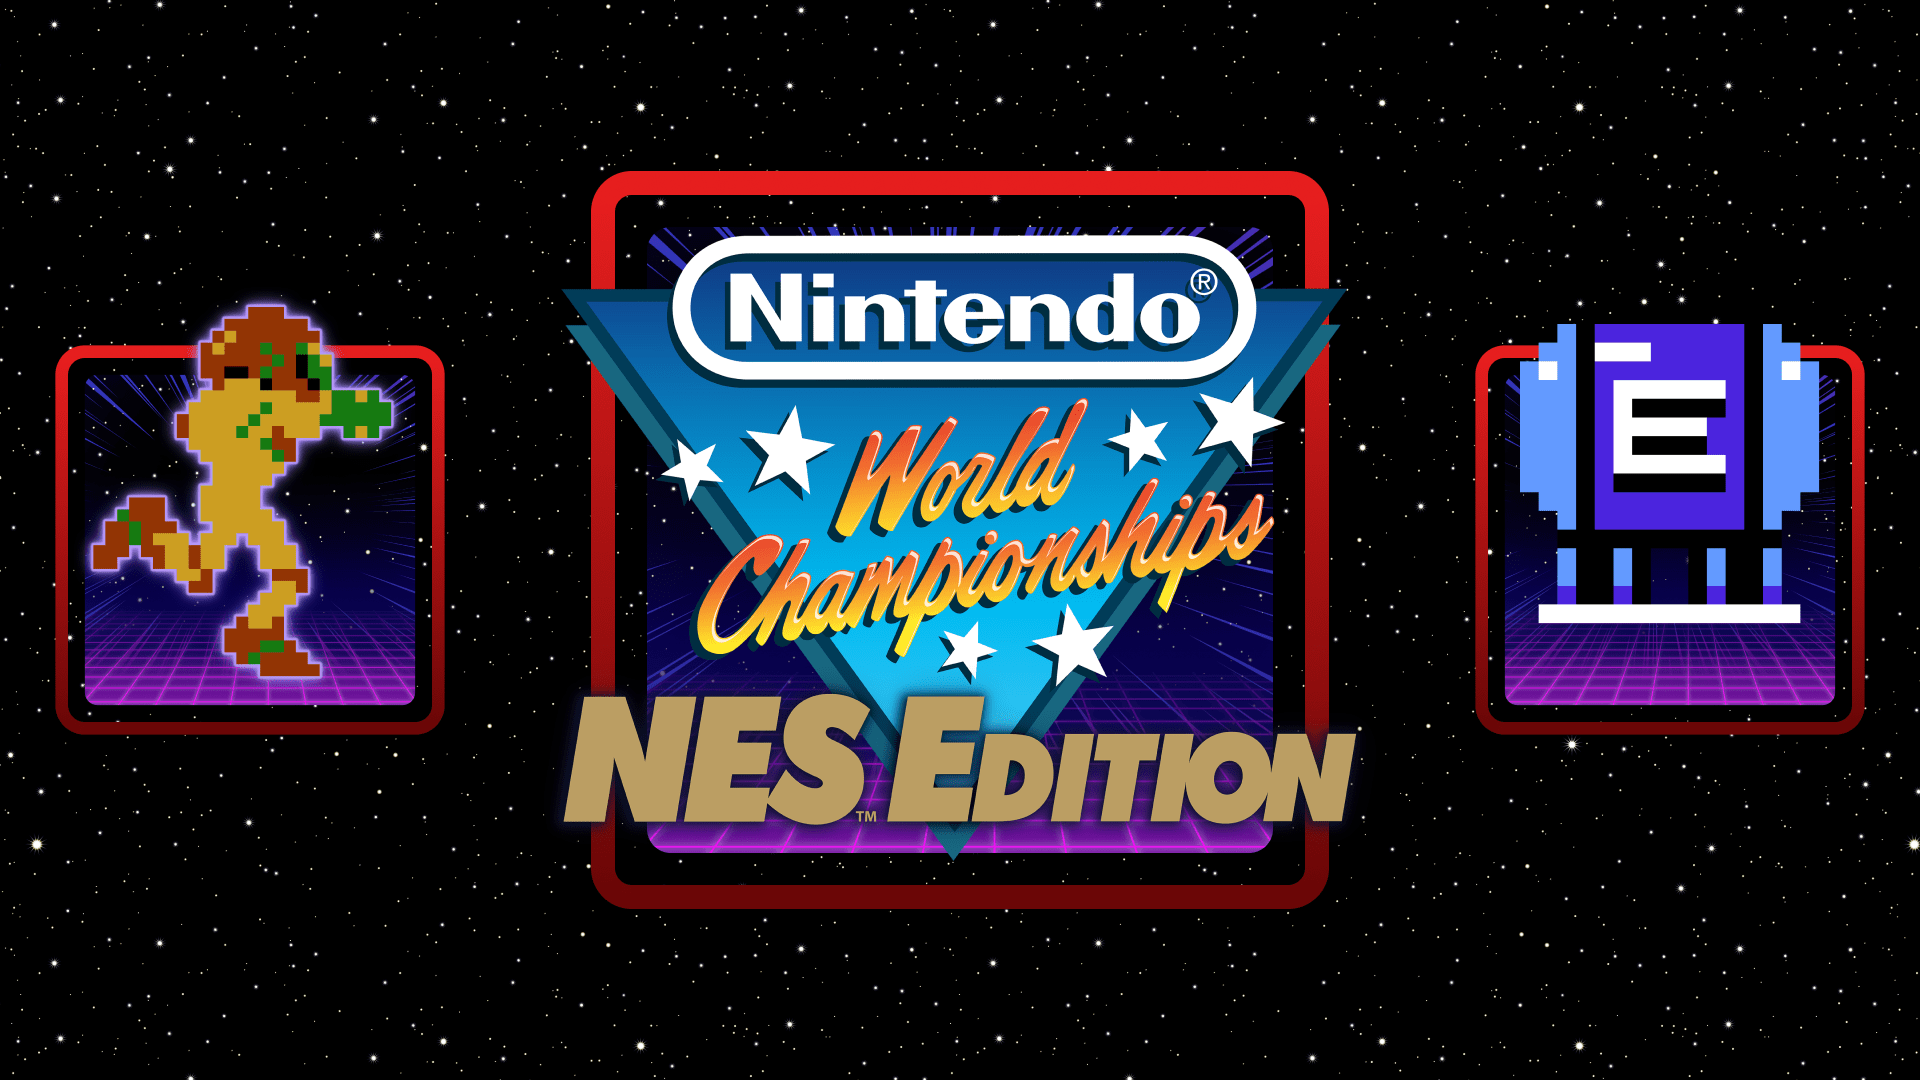 Nintendo World Championships: NES Edition with retro Metroid game art